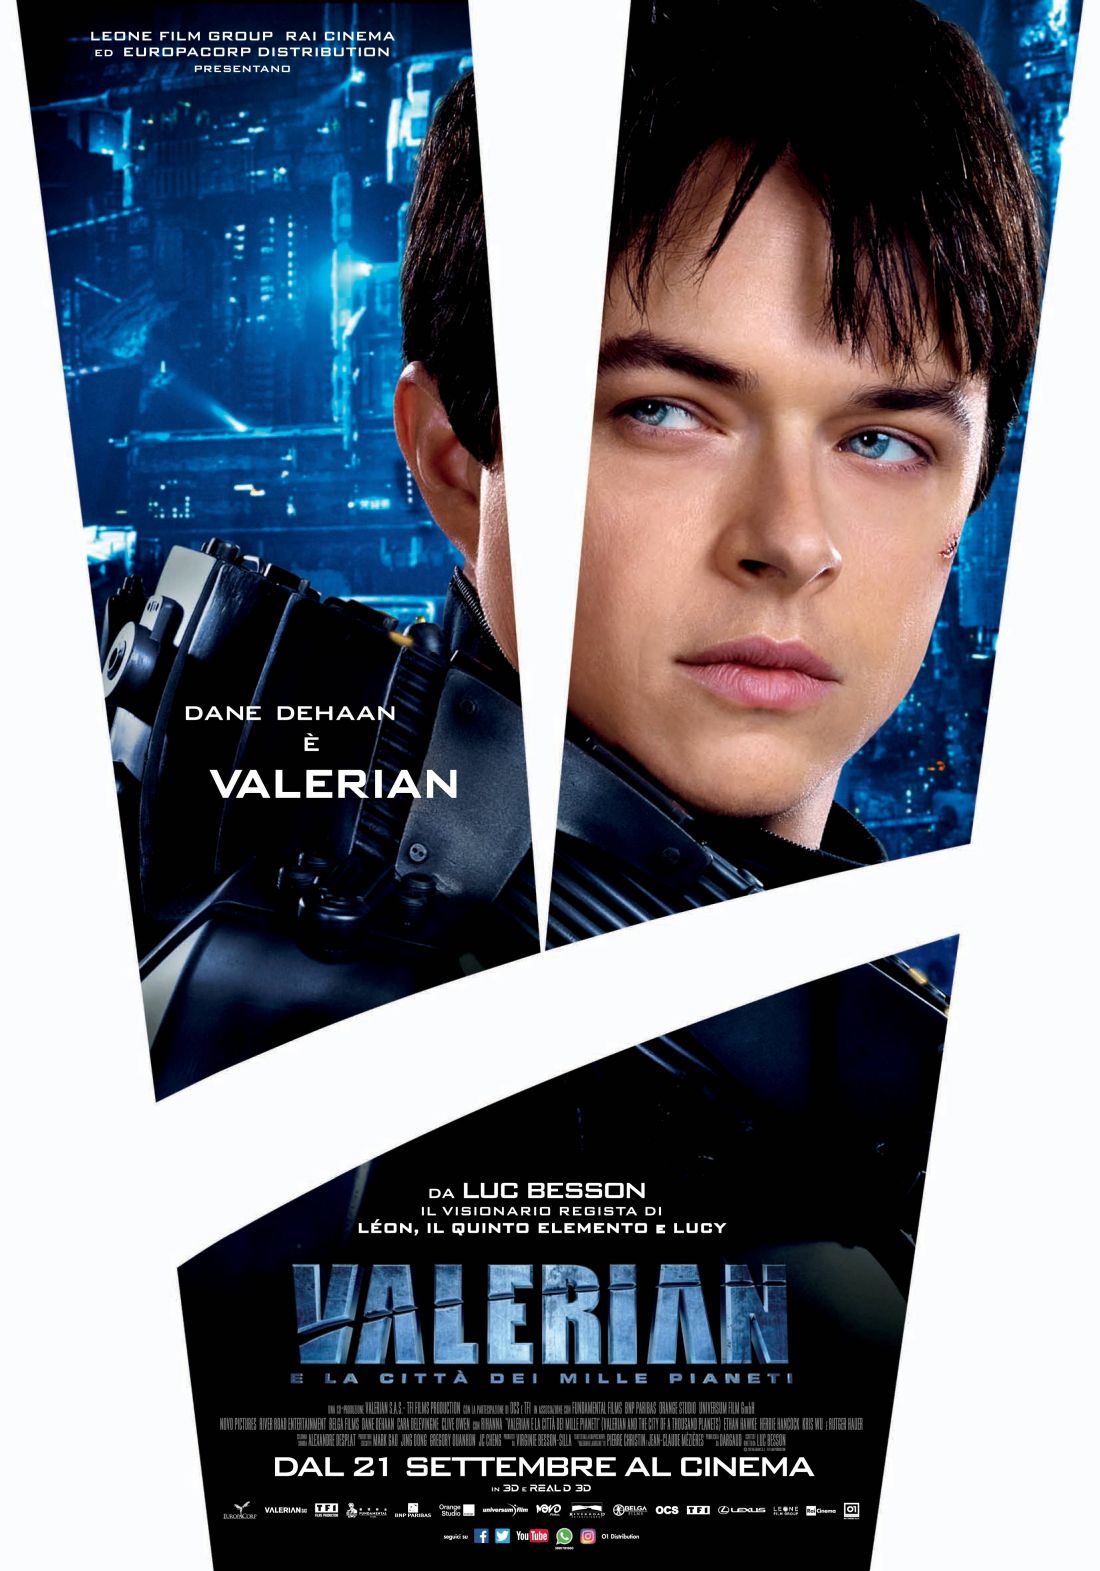 Character Valerian